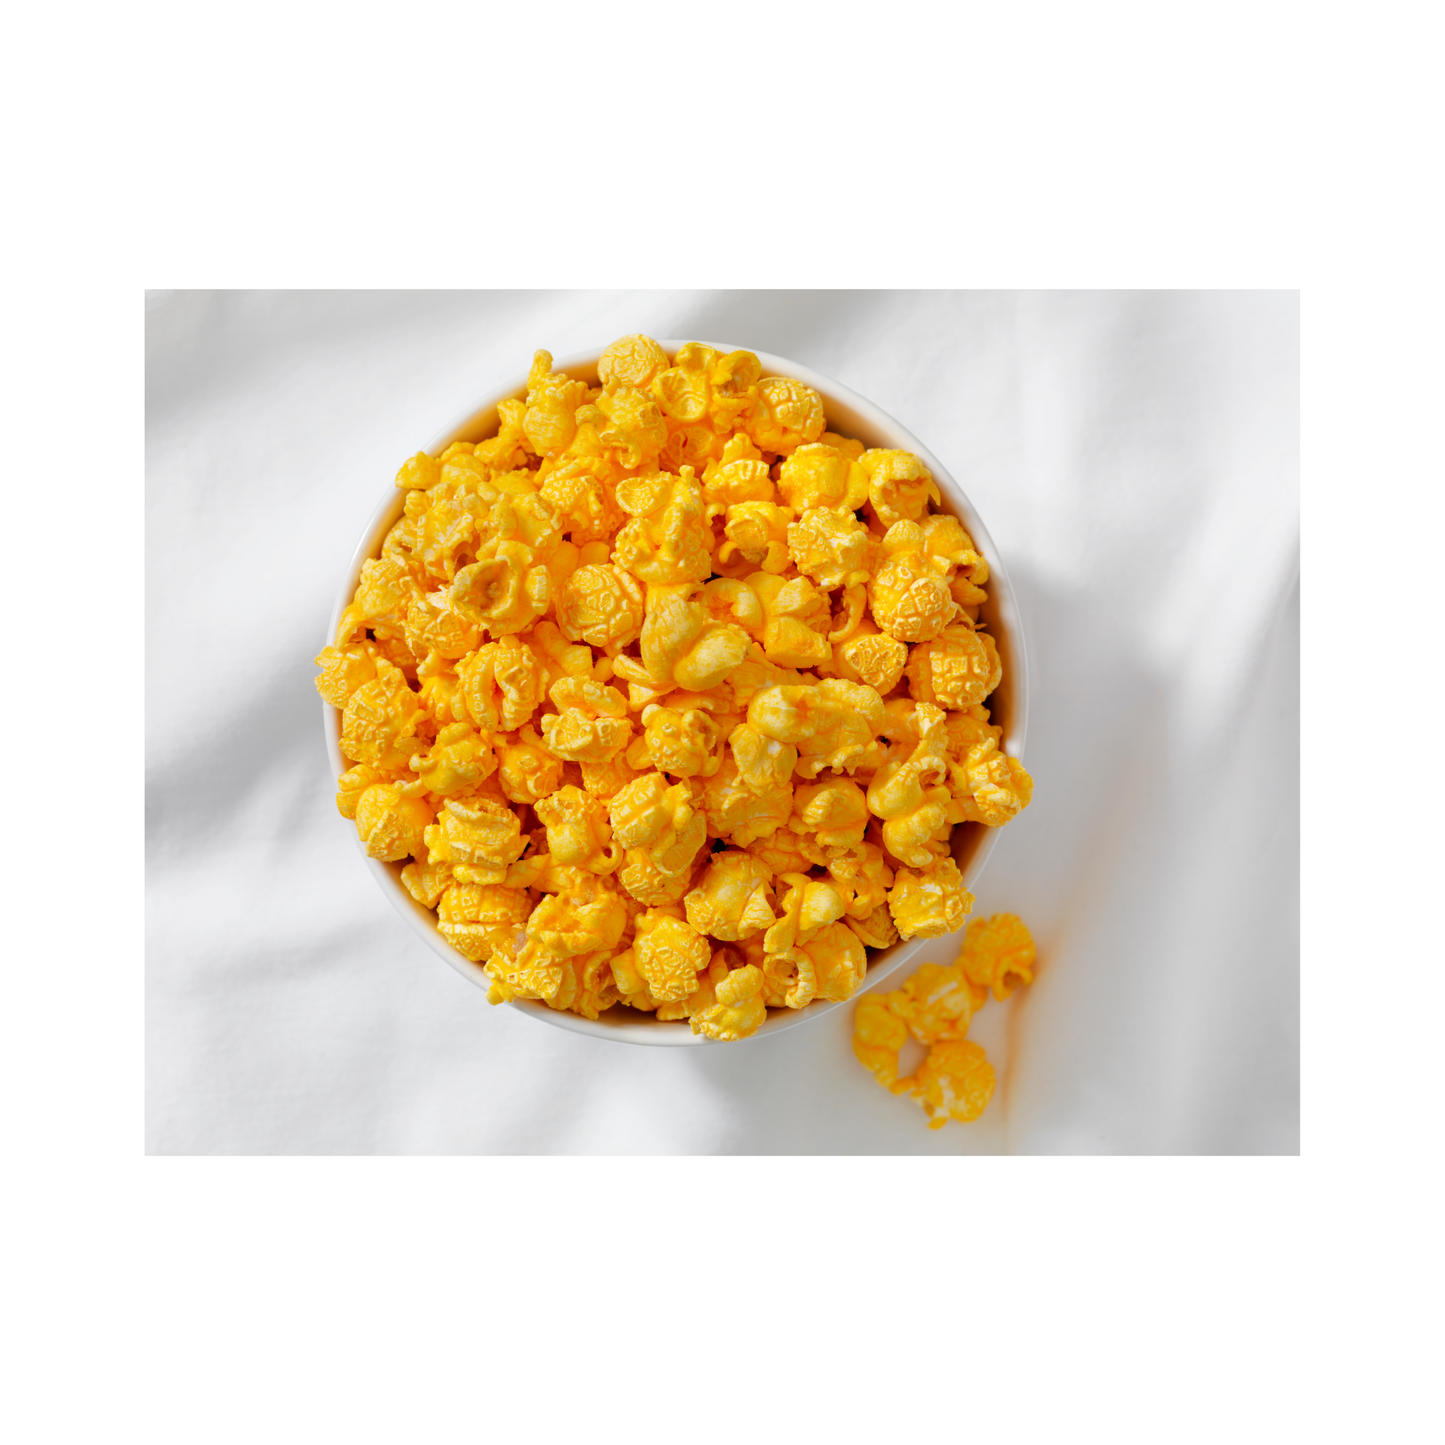 Savory Flavored Popcorn